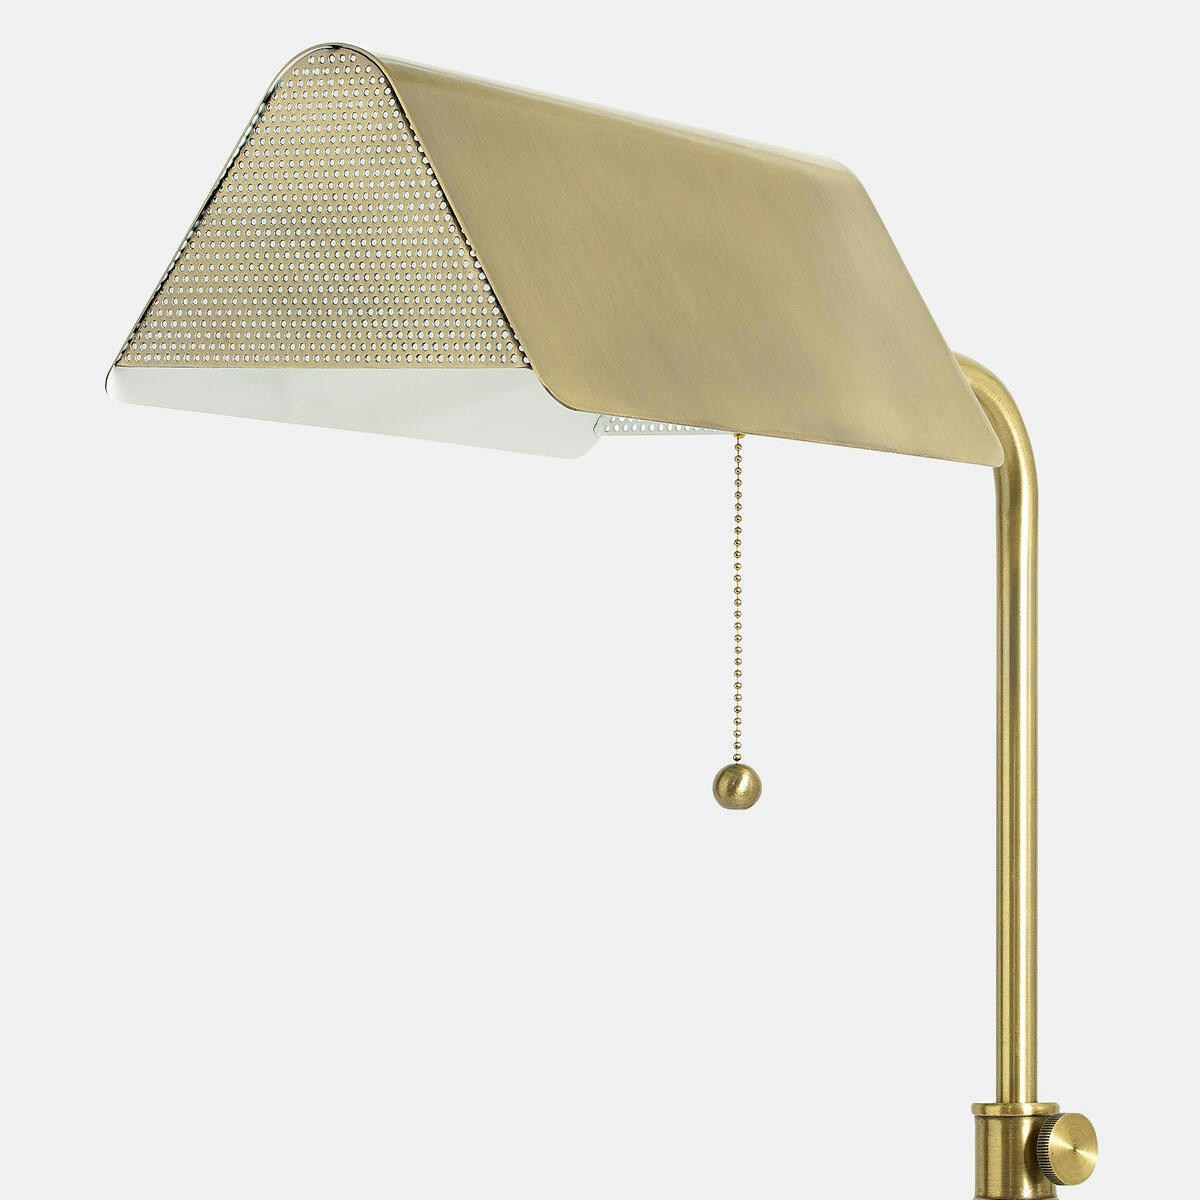 Soho Home Halsted Banker's Floor Lamp, £225